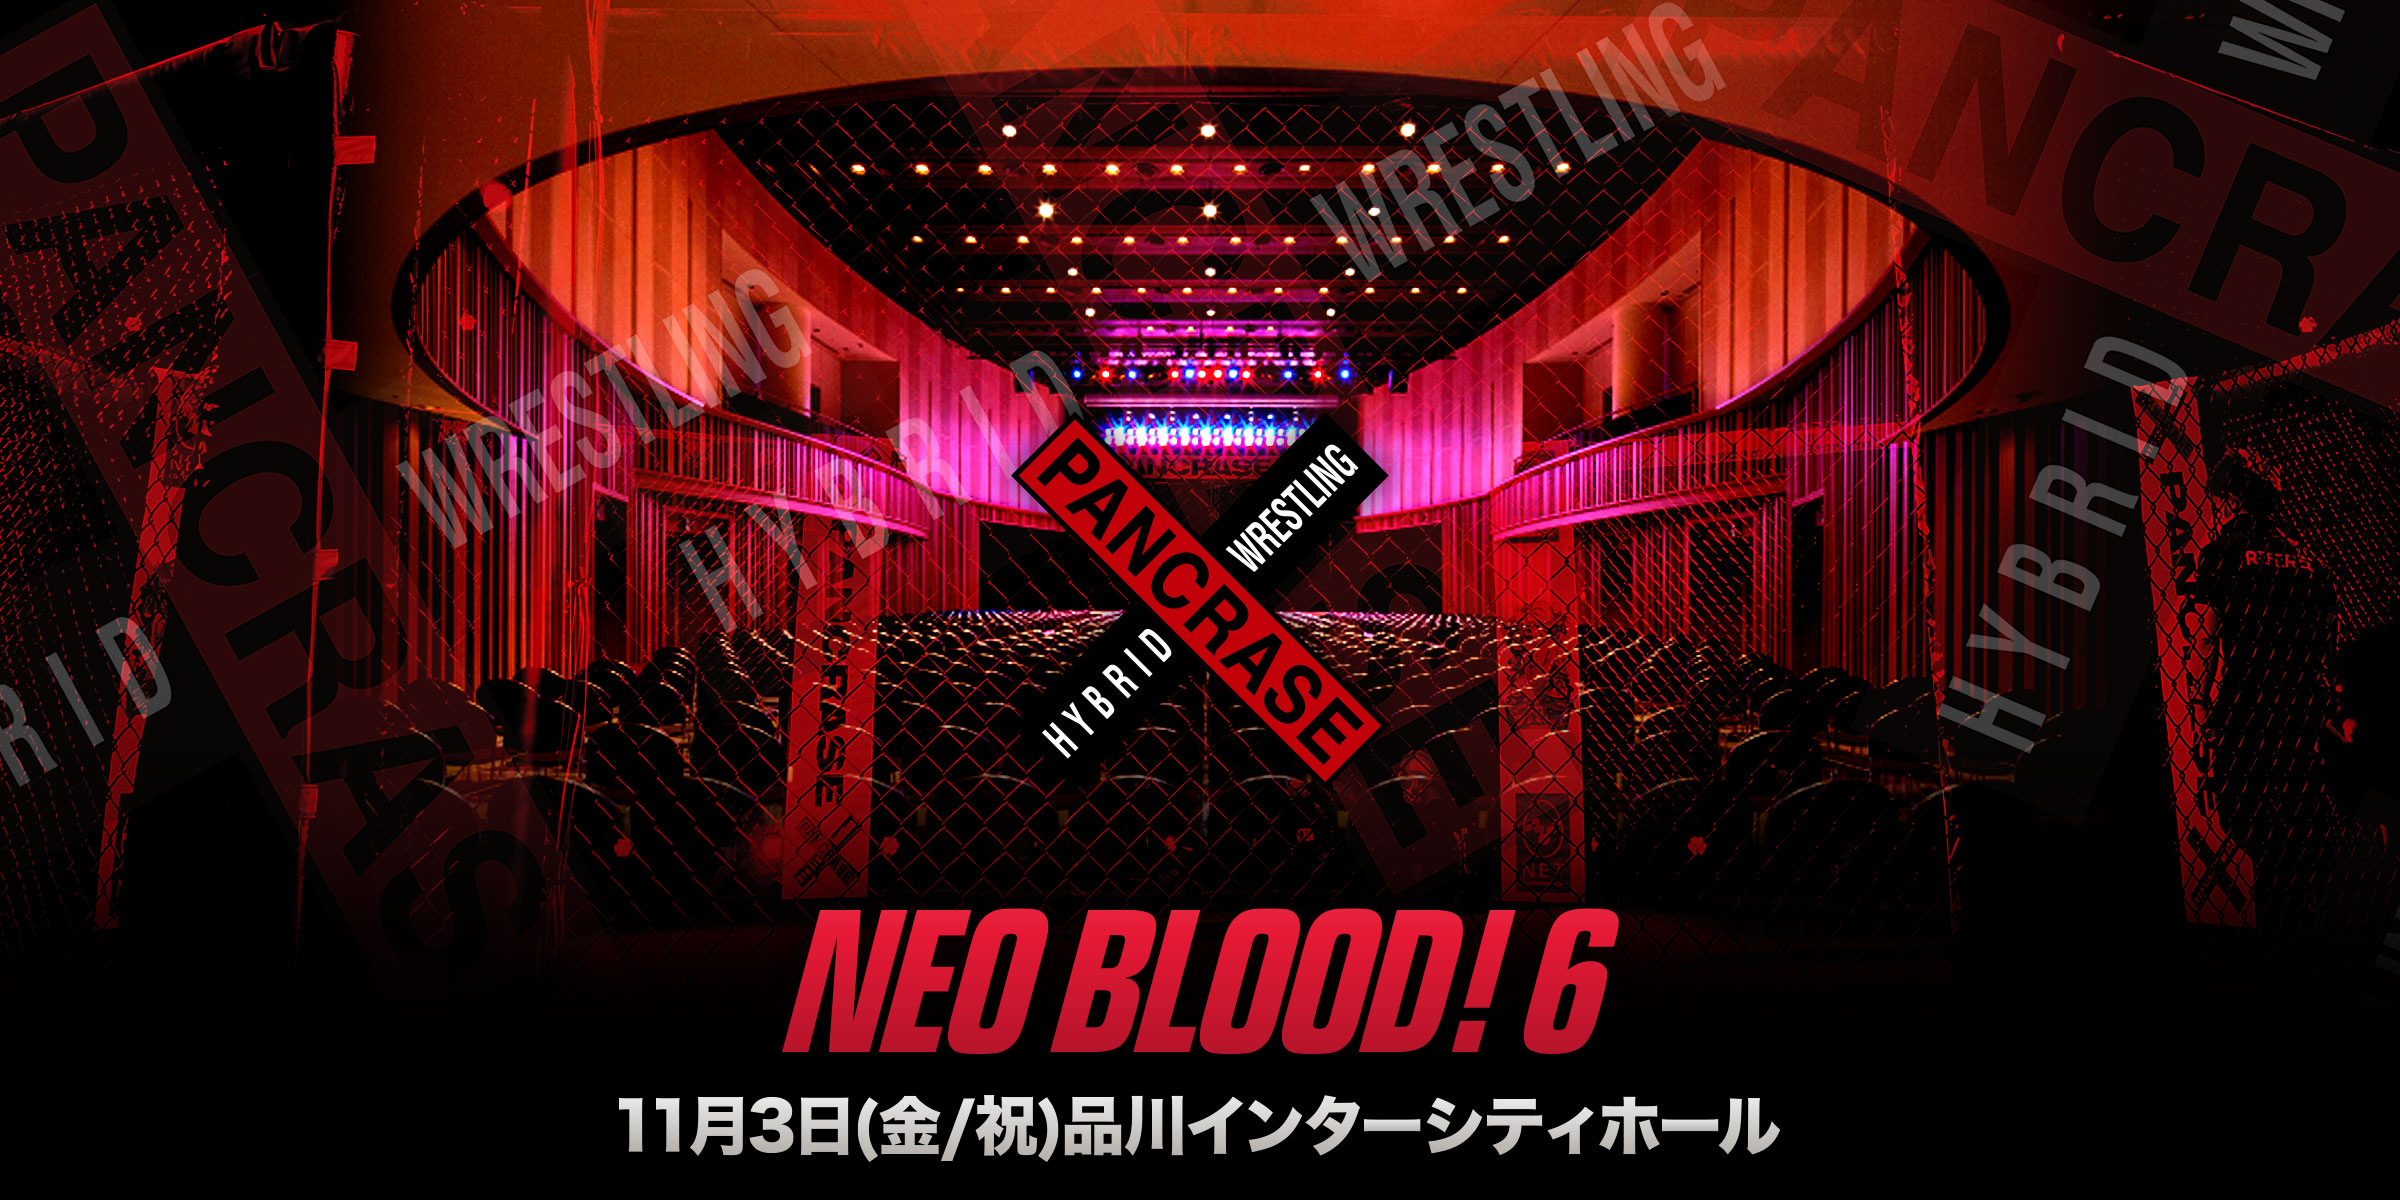 NEO BLOOD! 6